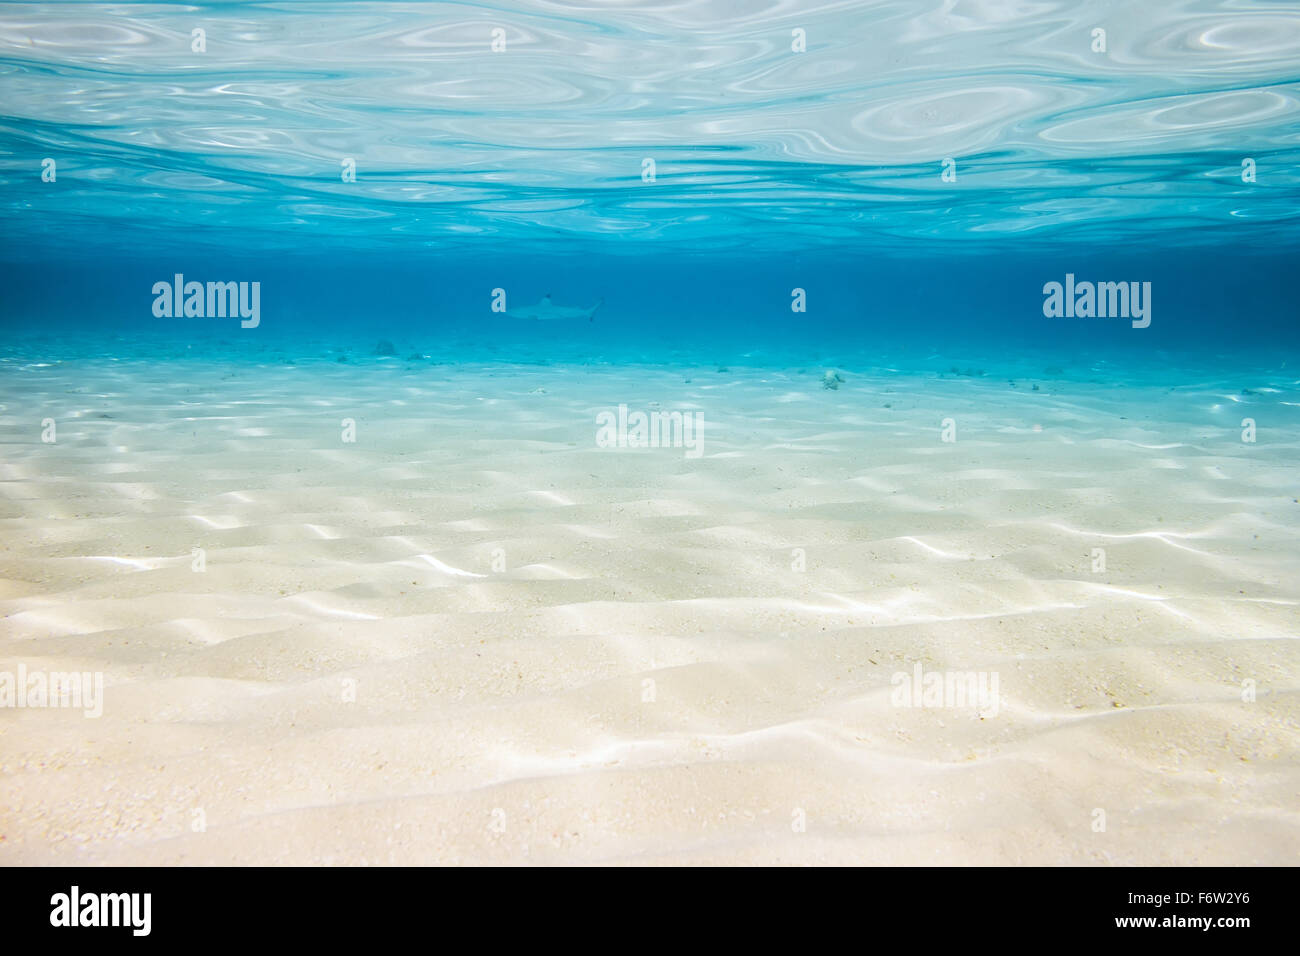 underwater background with sandy sea bottom Stock Photo